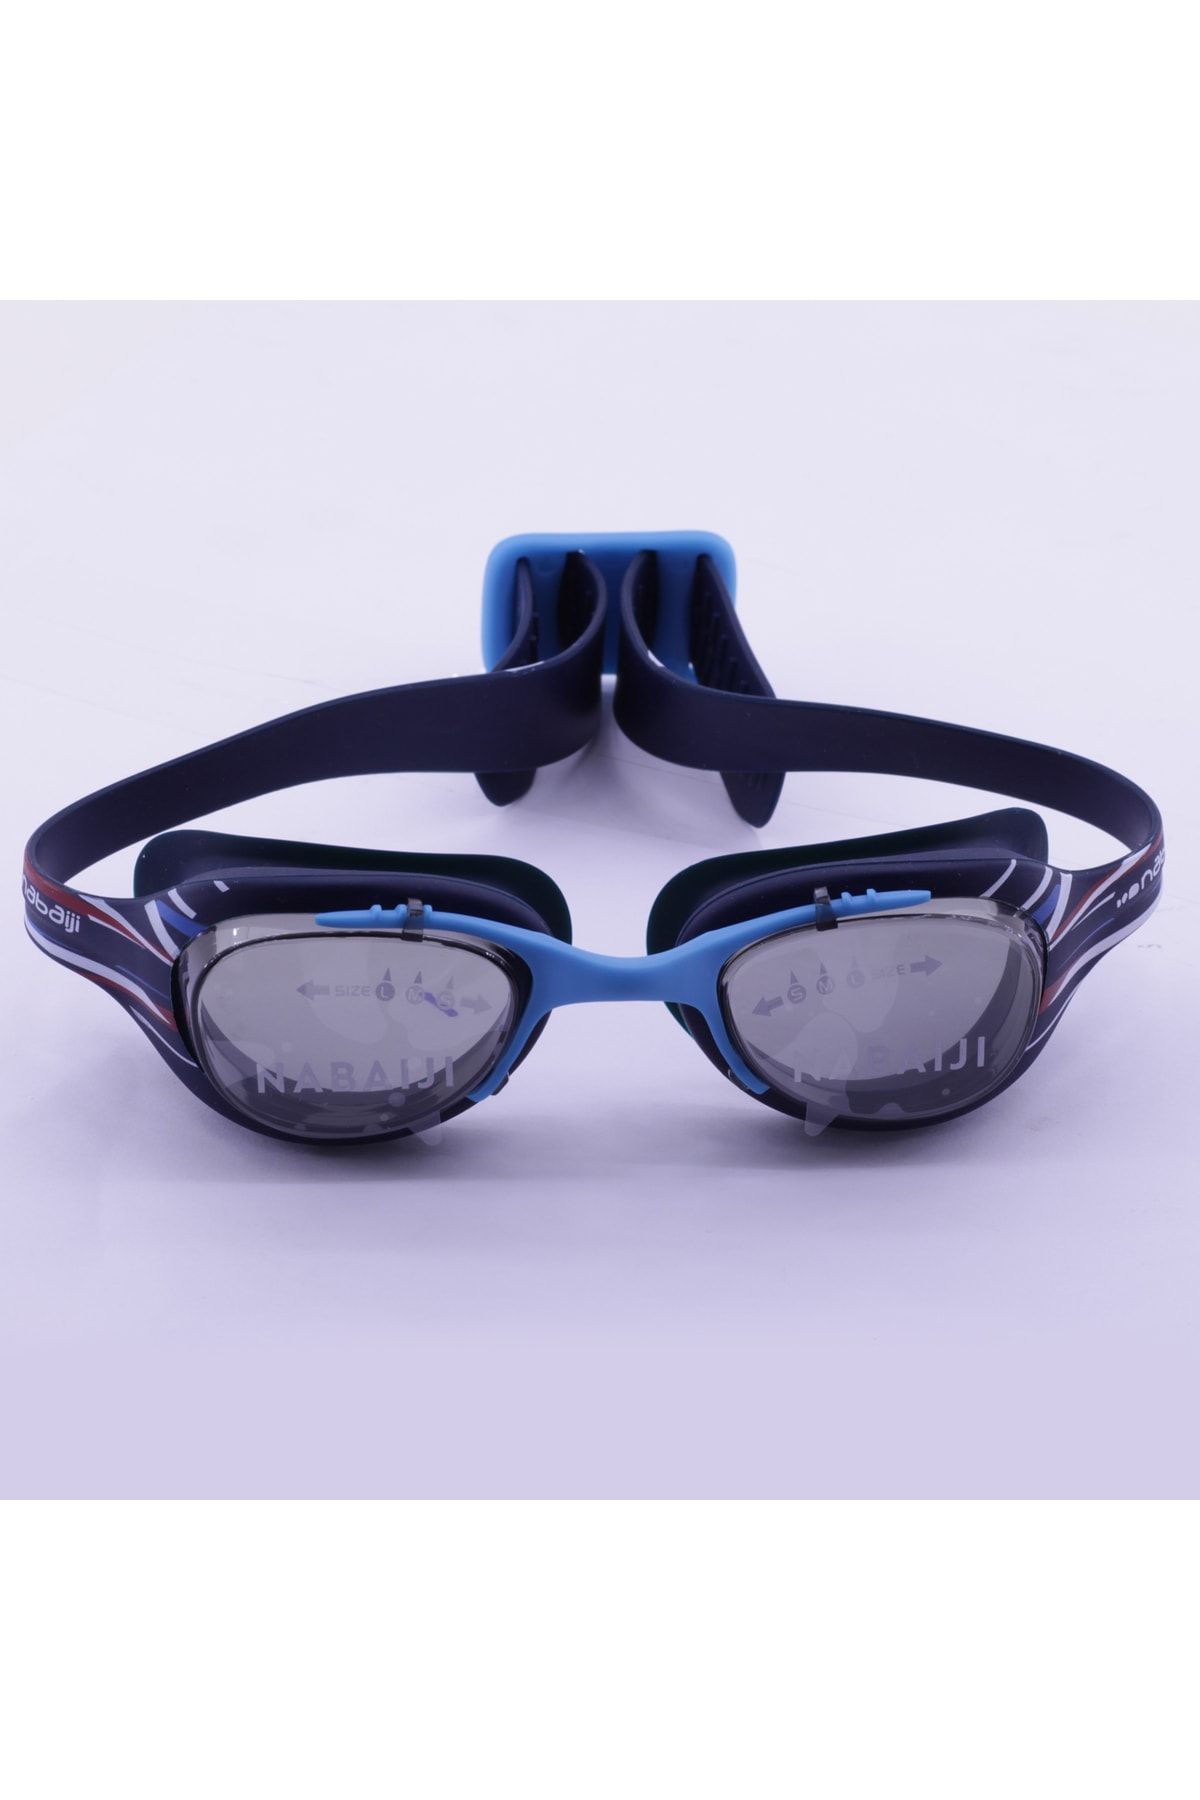 Decathlon - Yüzücü Gözlüğü Mavi Mika Baskılı L Boy Şeffaf Camlar